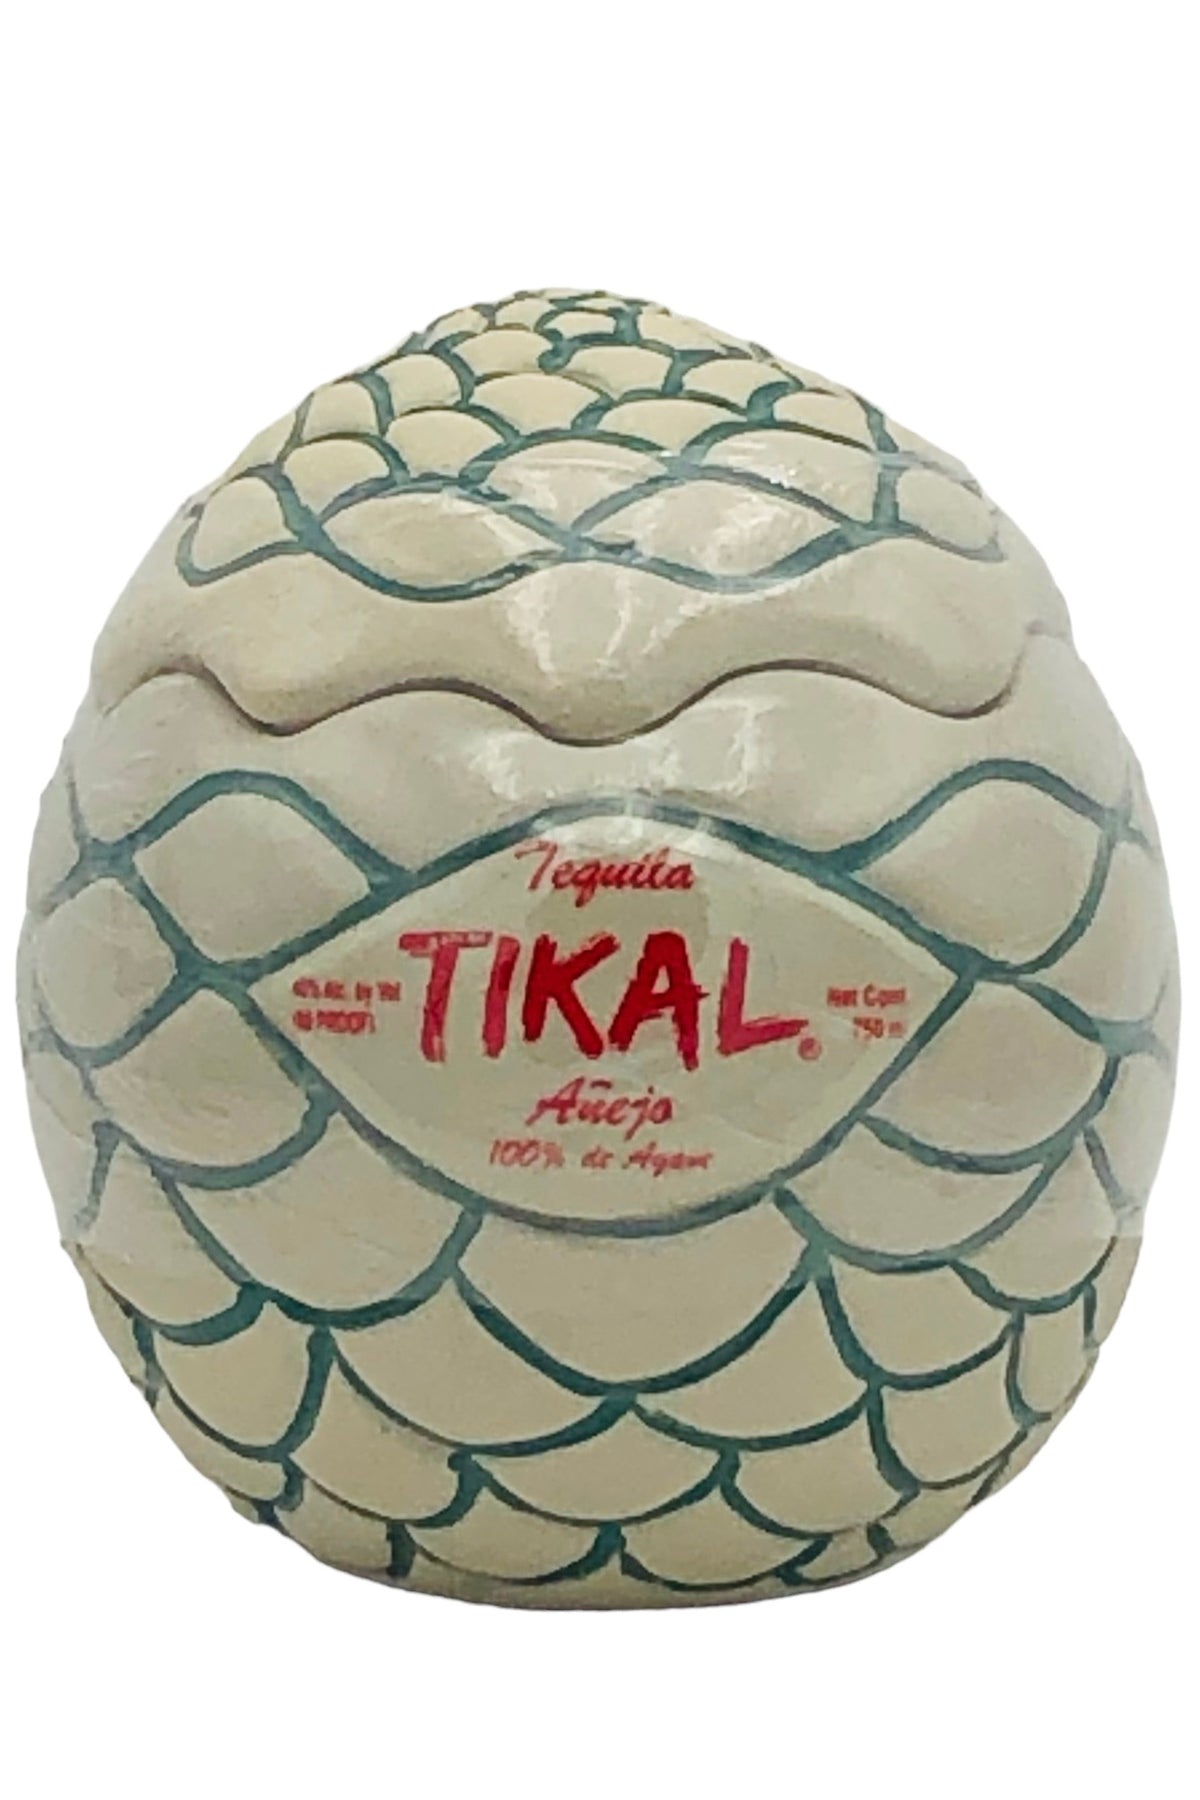 Tikal Anejo Tequila